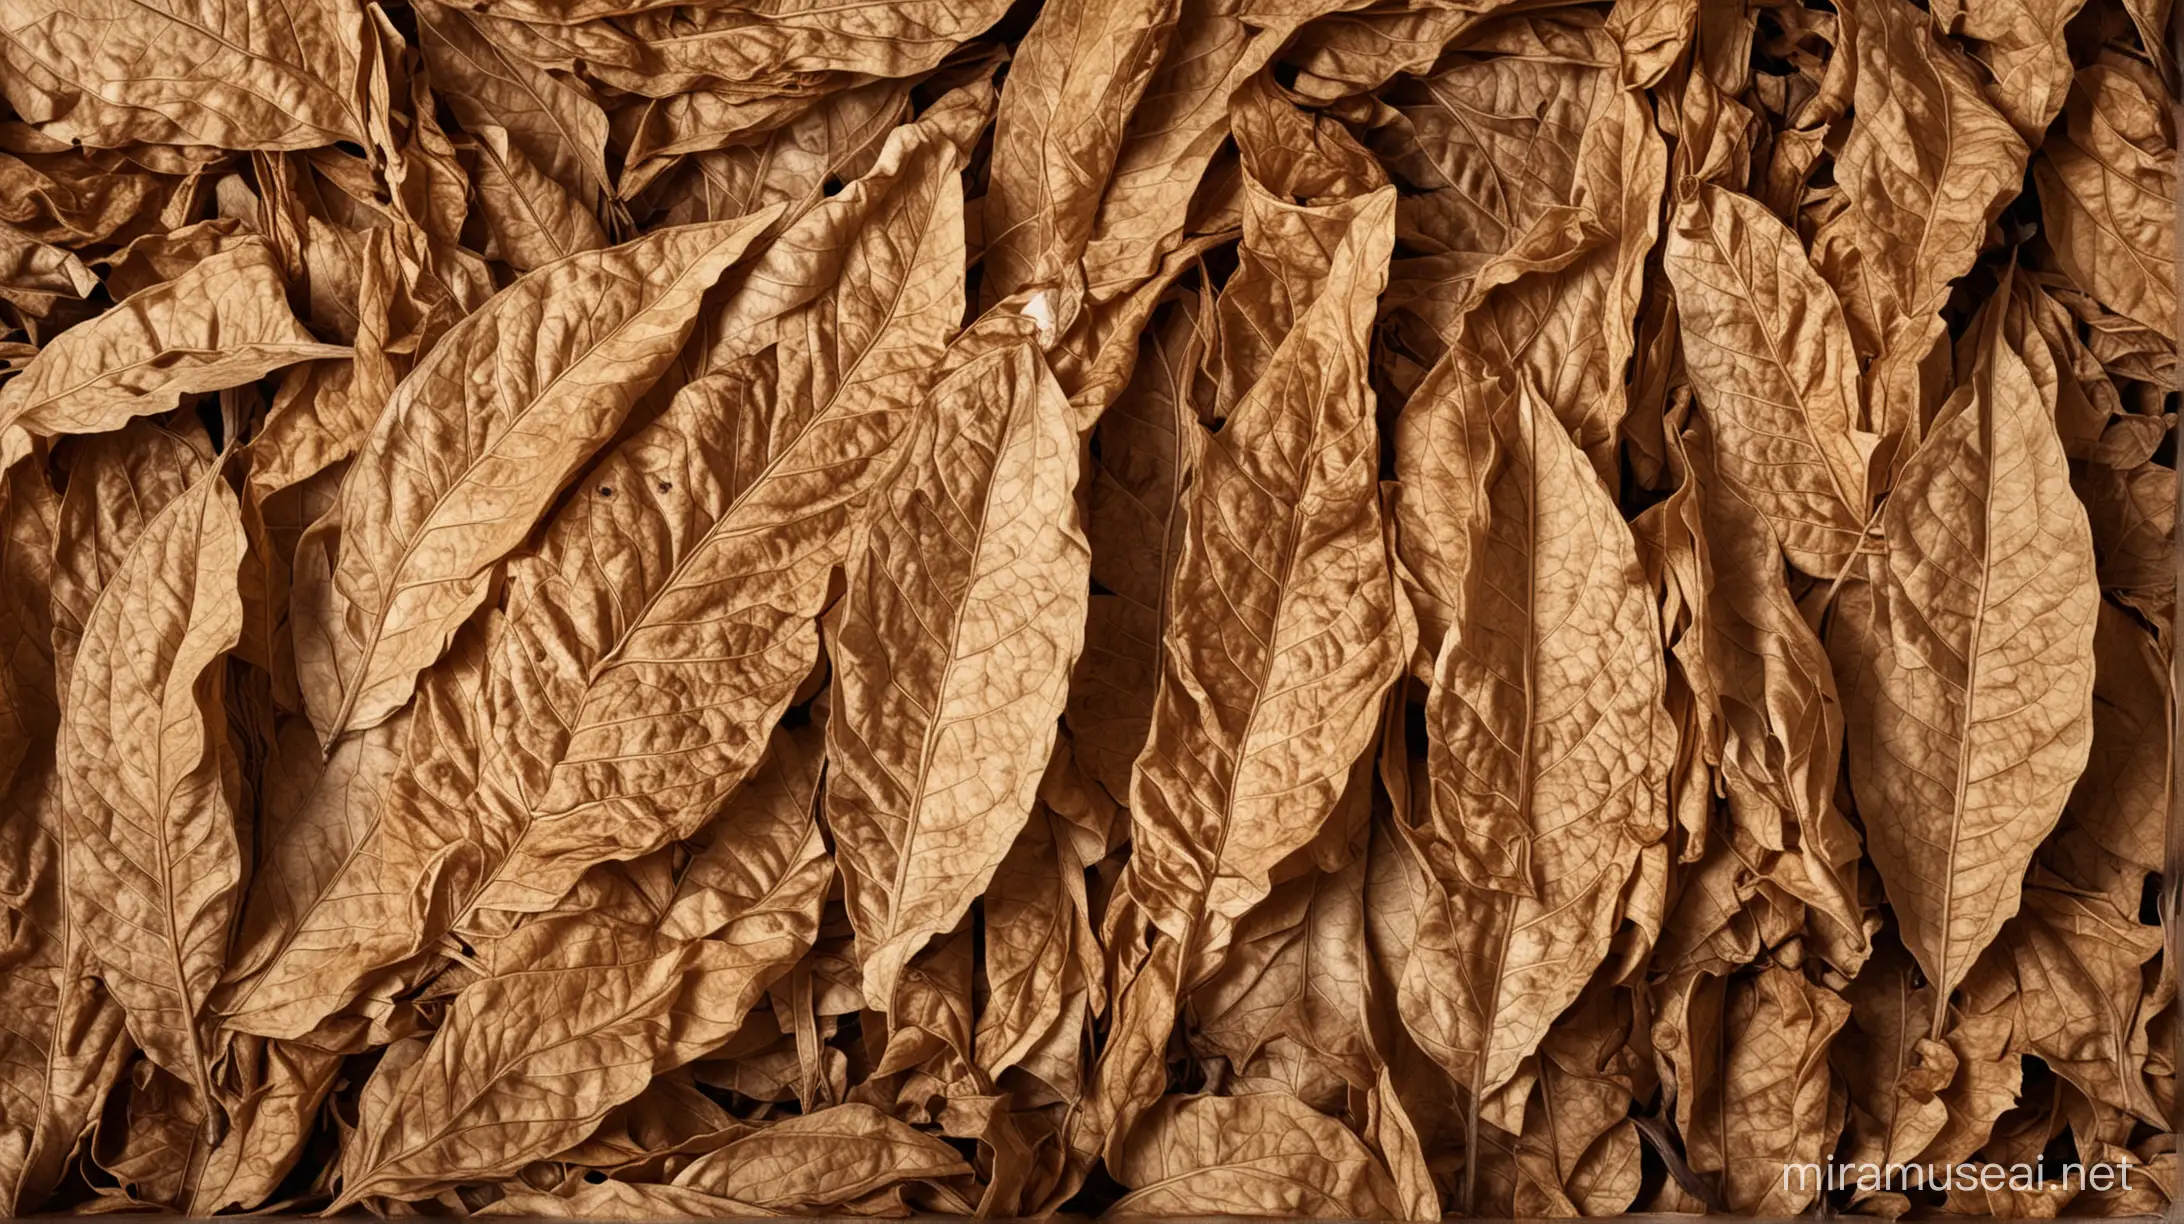 Monochrome Tobacco Leaf Manufacturing Process